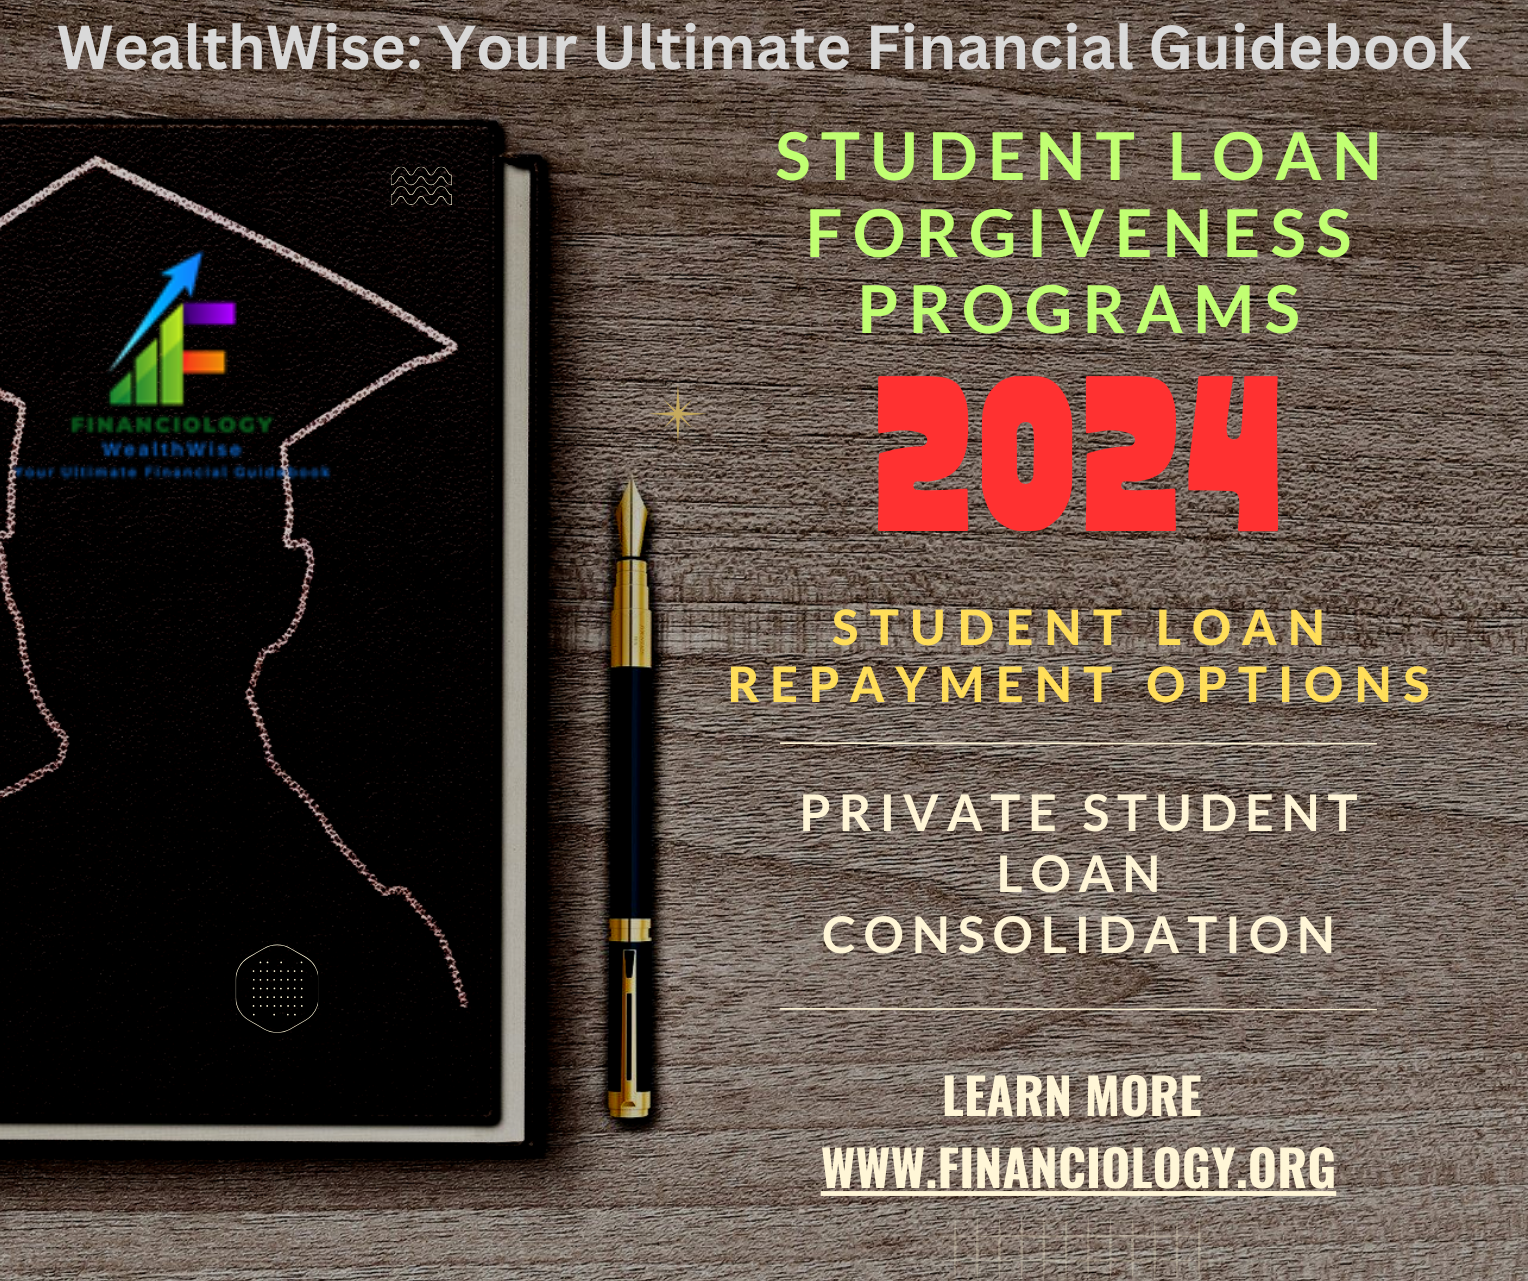 Student loan forgiveness programs; Student loan repayment options;